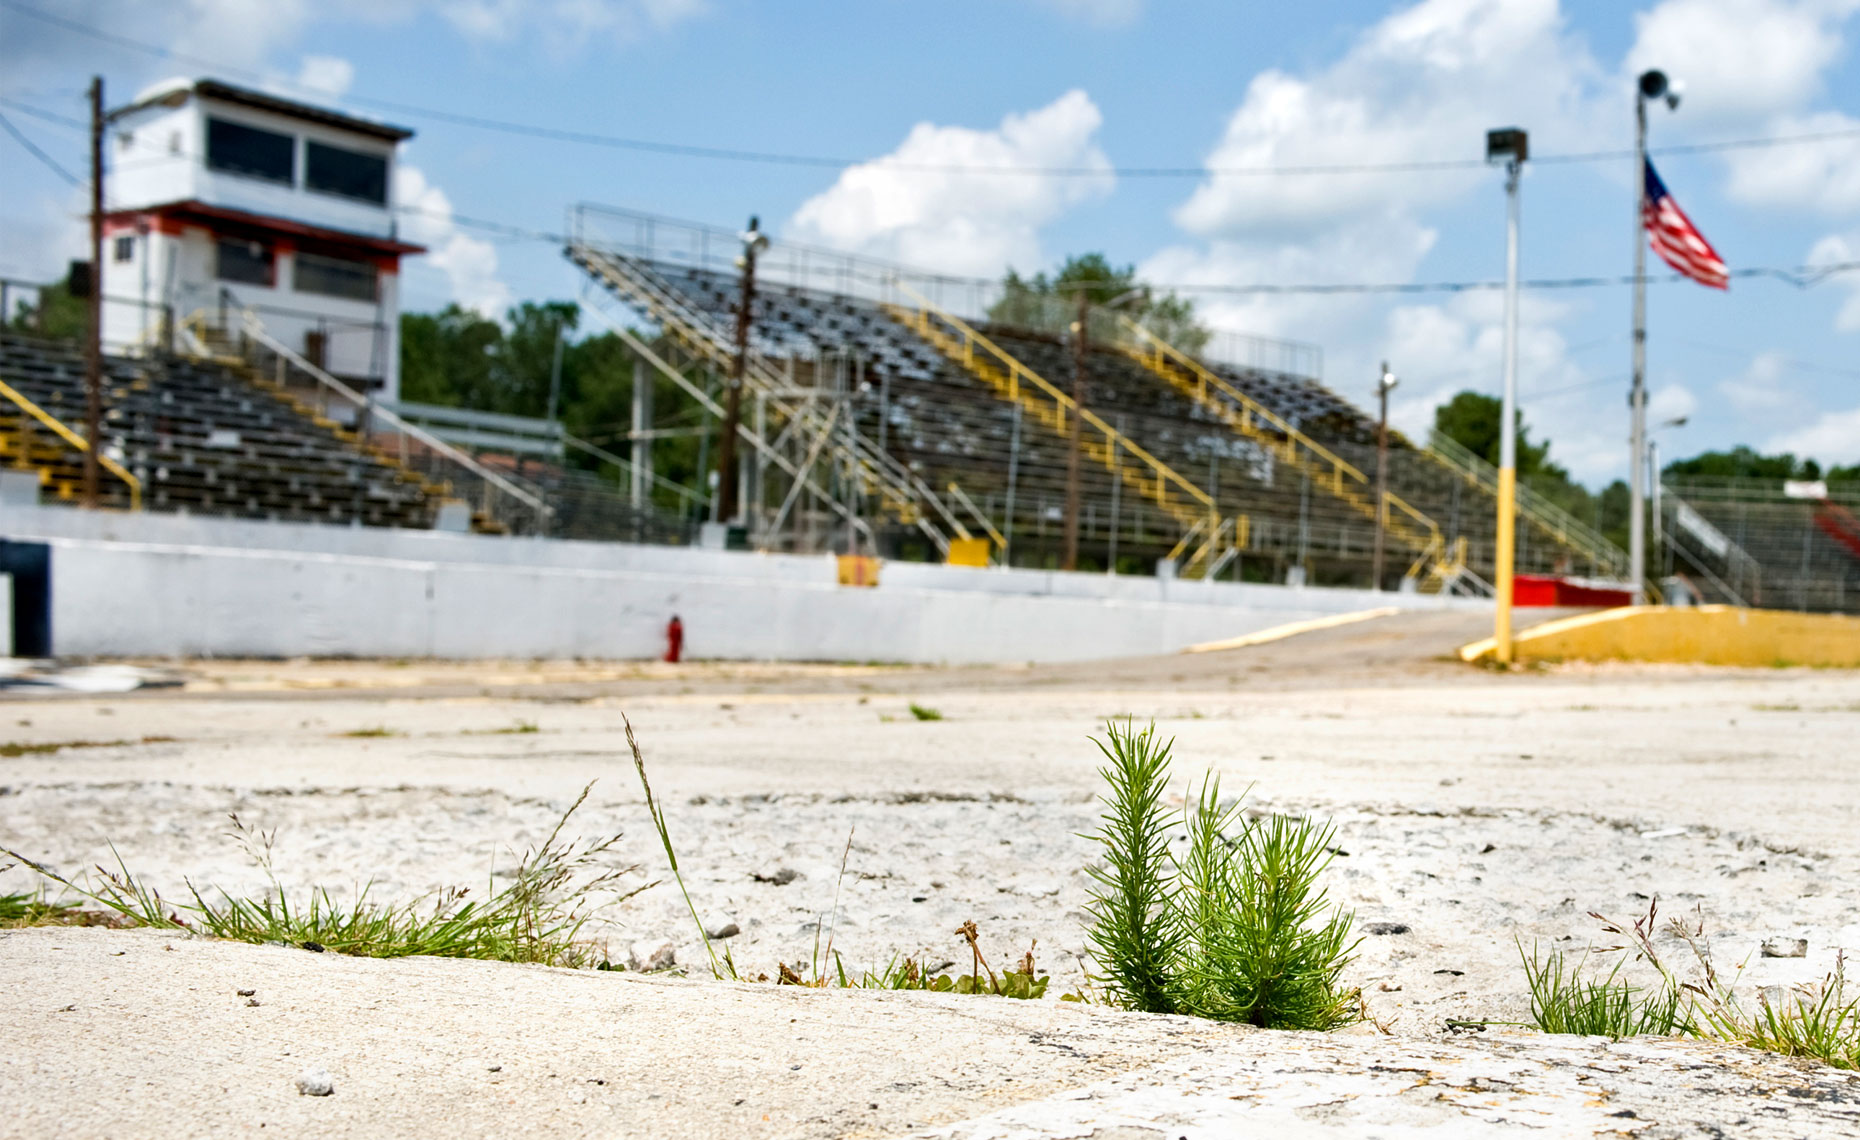 Editorial Photography Bryan Regan NASCAR Wake County Speedway track